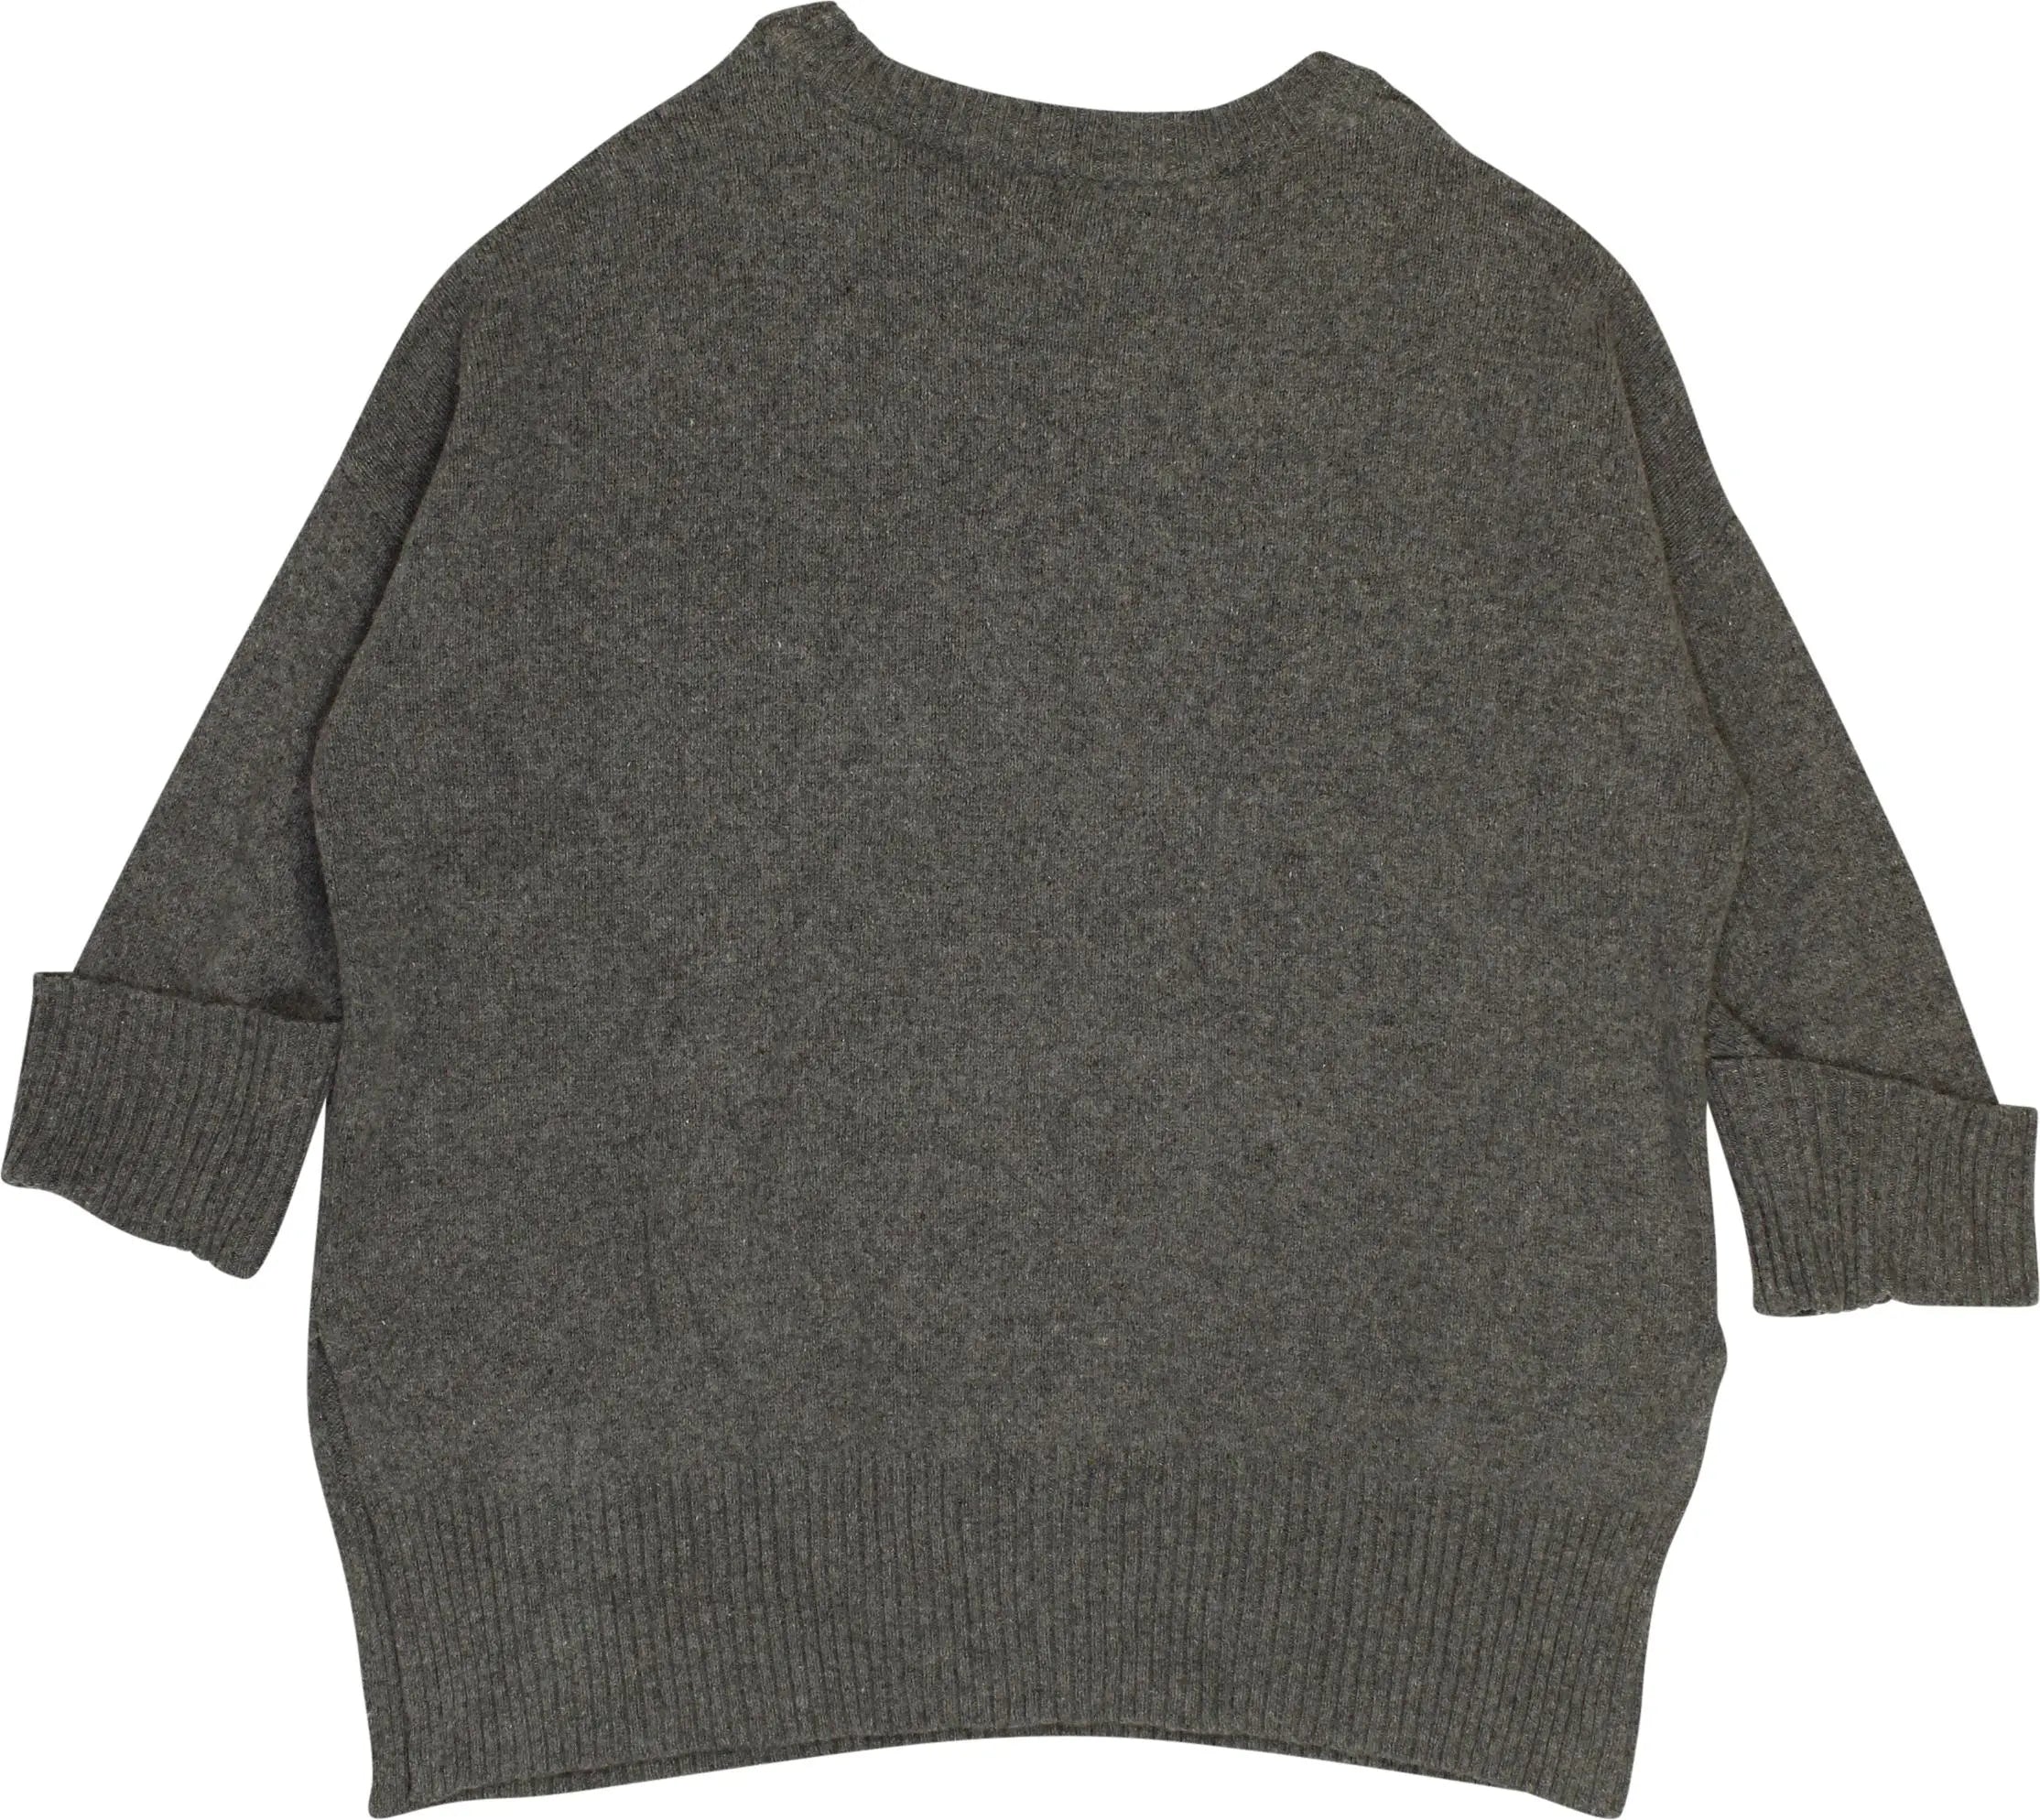 ADPT. - Grey Wool Blend Jumper- ThriftTale.com - Vintage and second handclothing